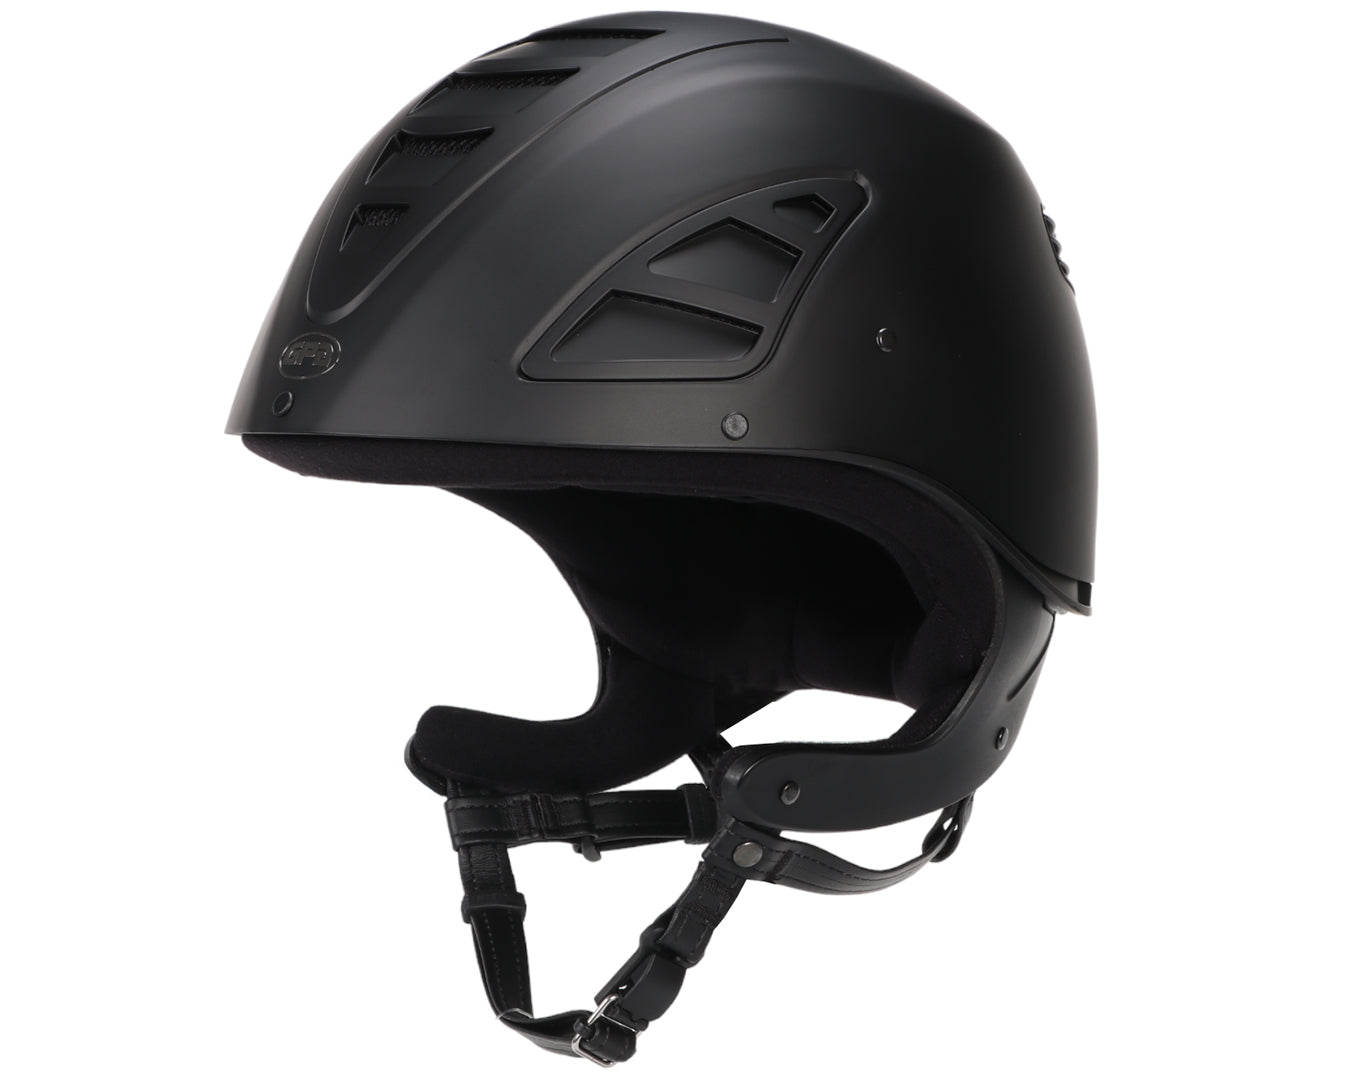 GPA Easy Speed Air TLS Riding Helmet